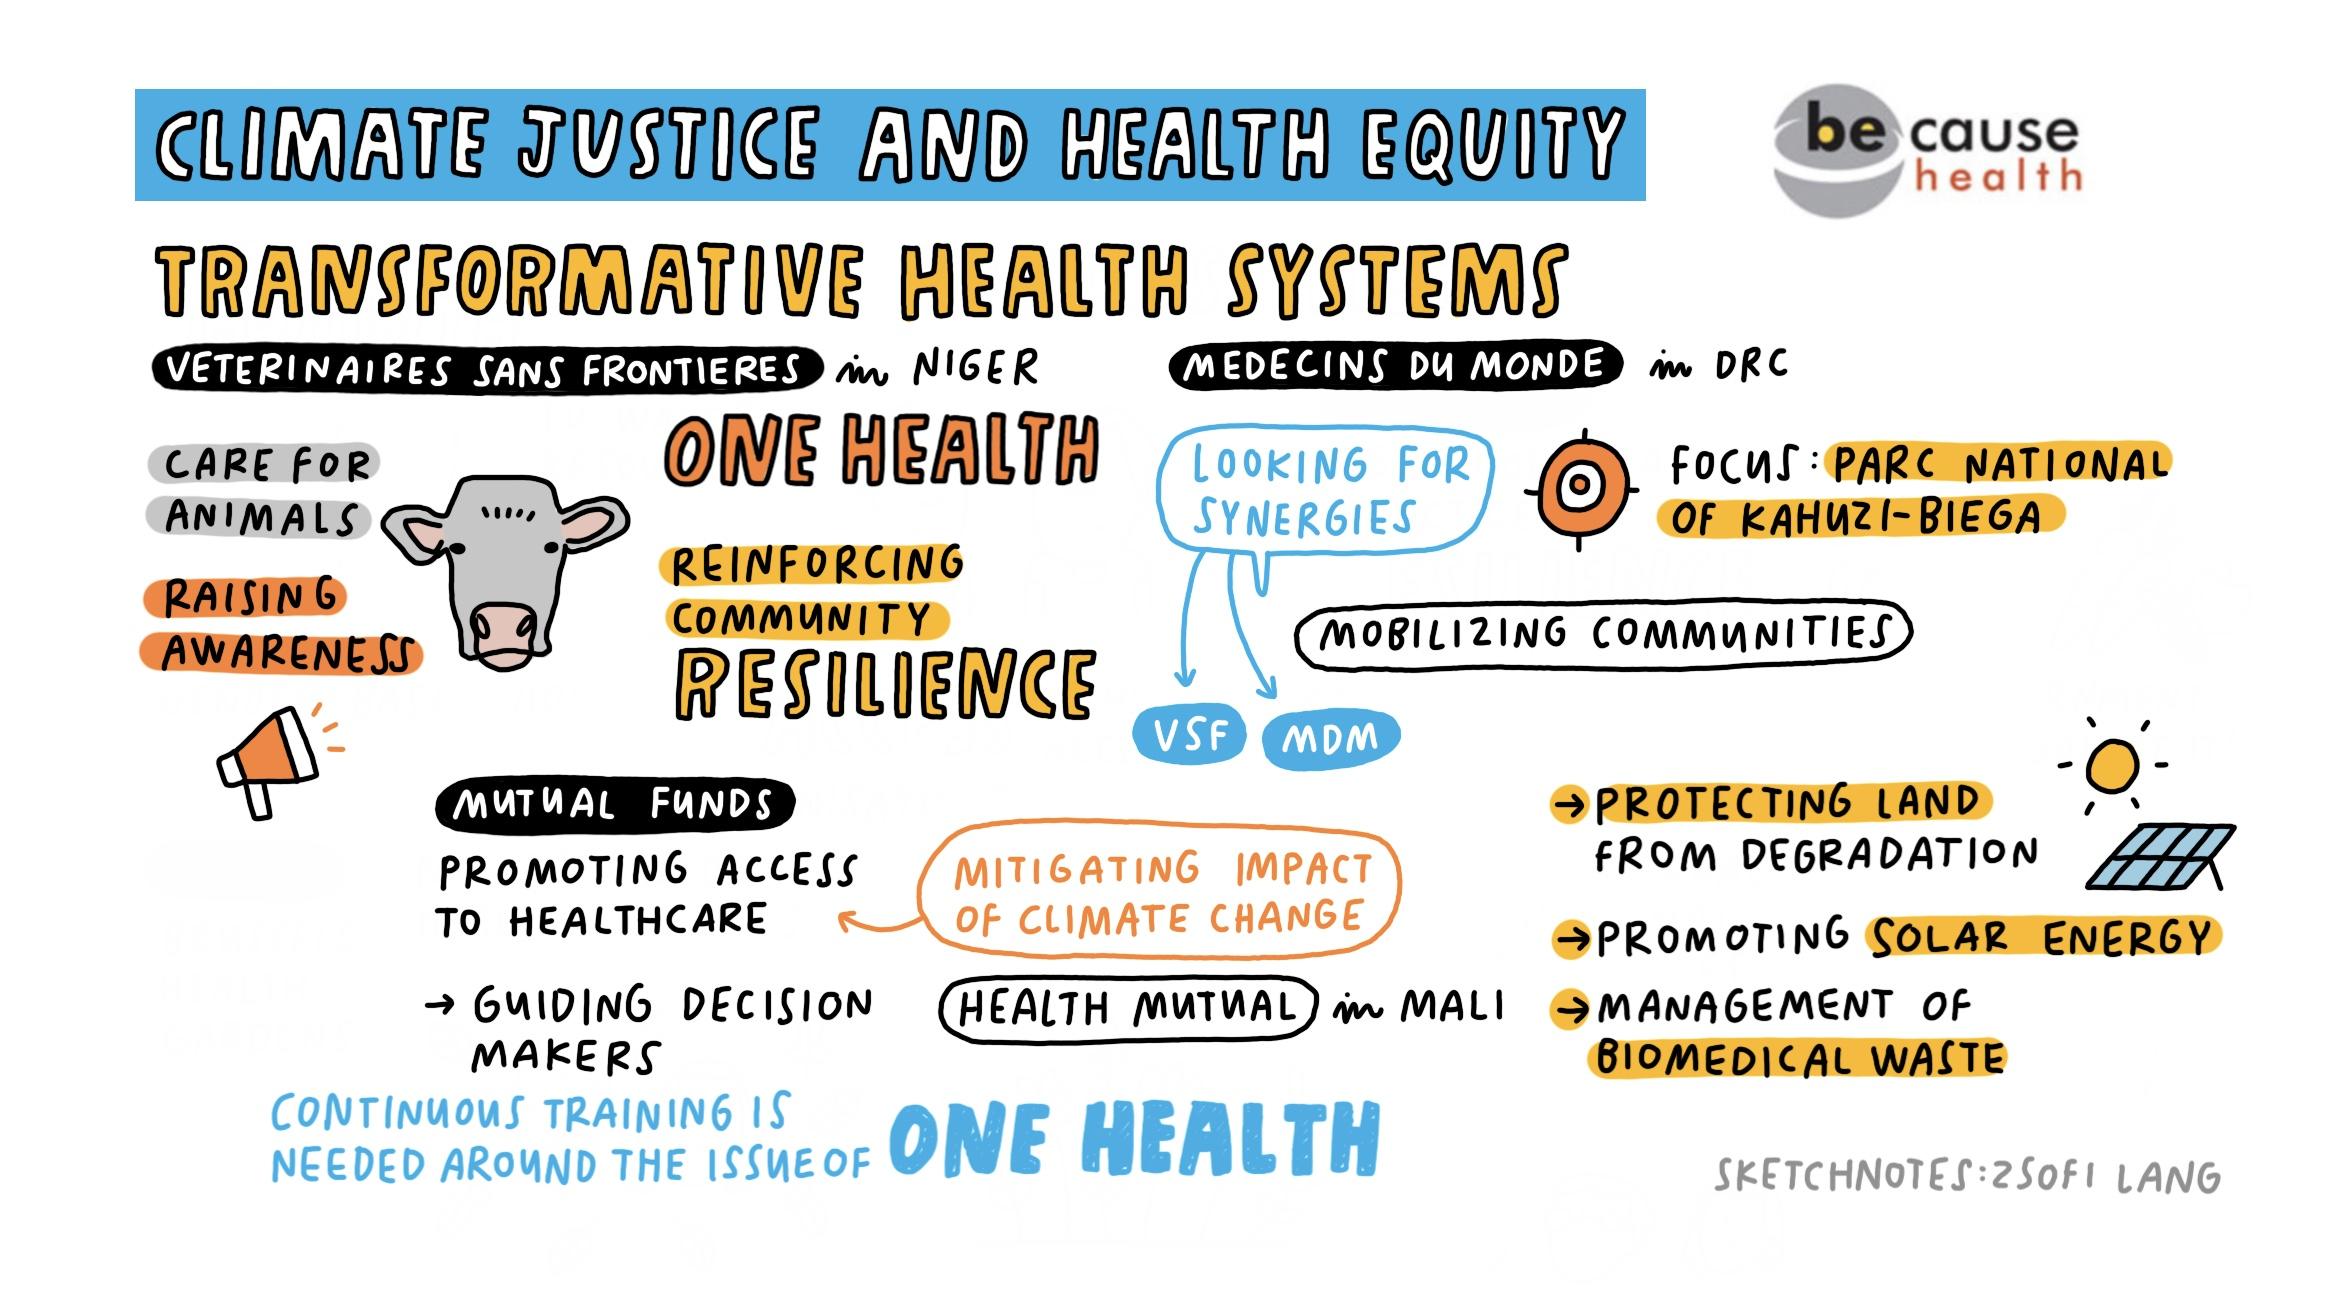 Transformative health systems